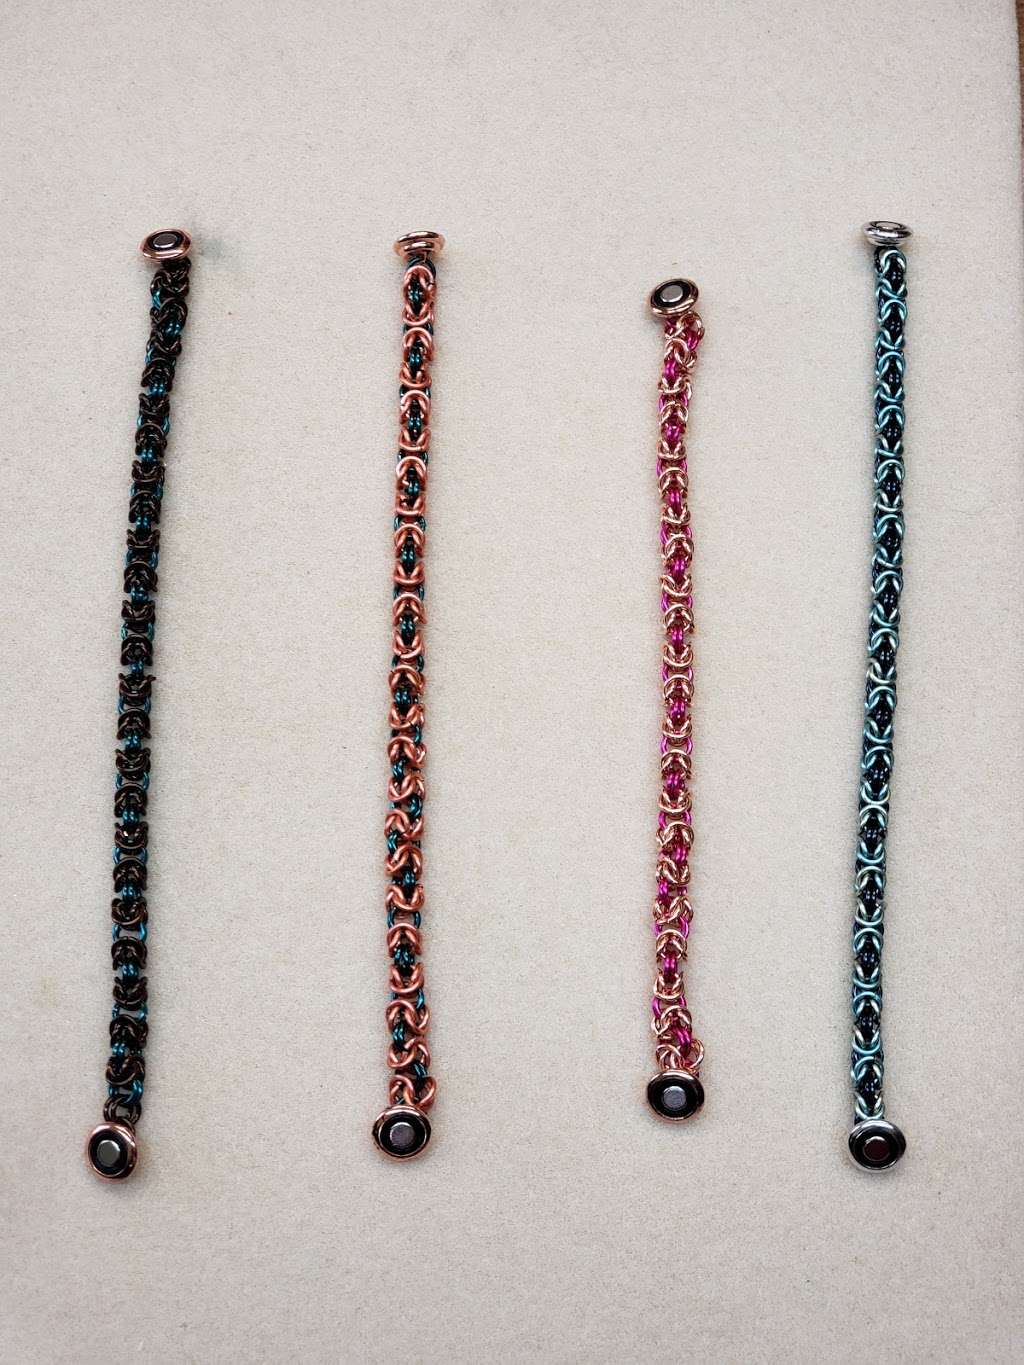 Originals Beads & Gems | 555 W Bitters Rd, San Antonio, TX 78216 | Phone: (210) 490-7625